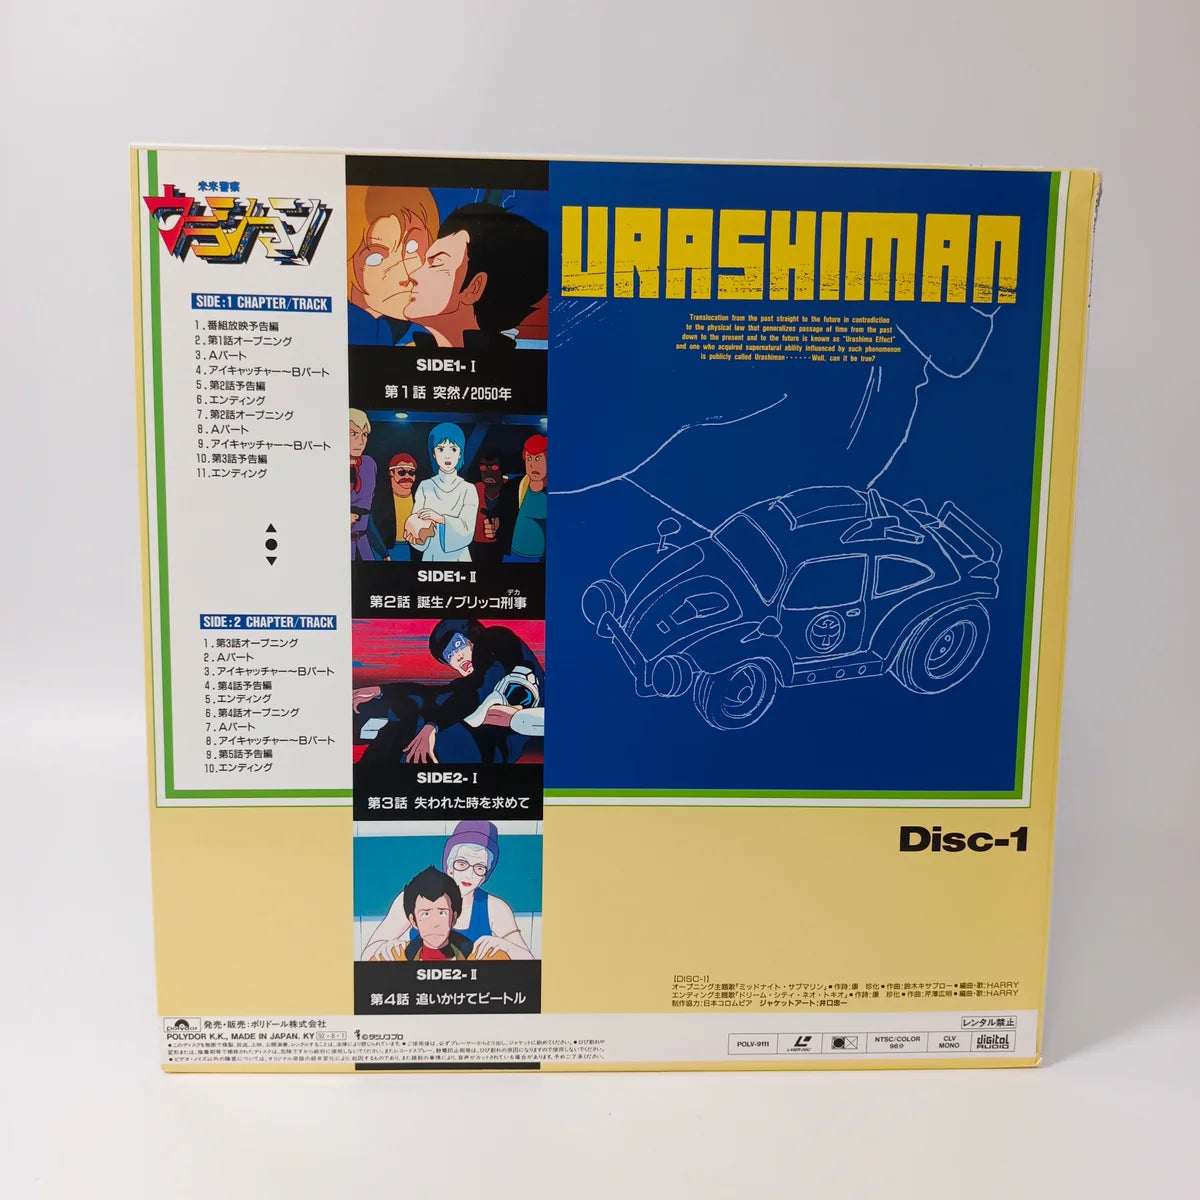 Urashiman